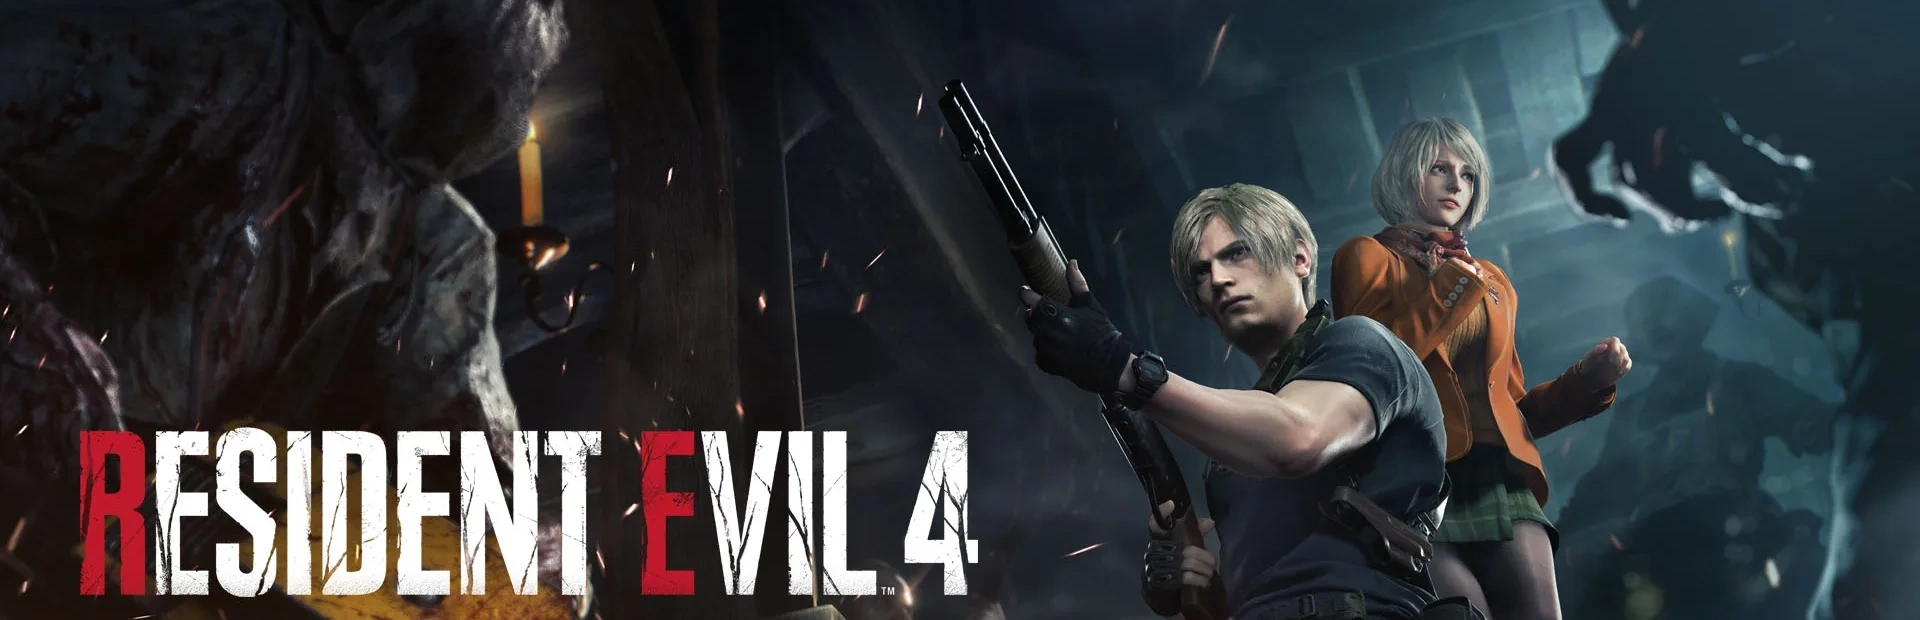 Resident Evil 4 Ultimate HD Editionbanner3